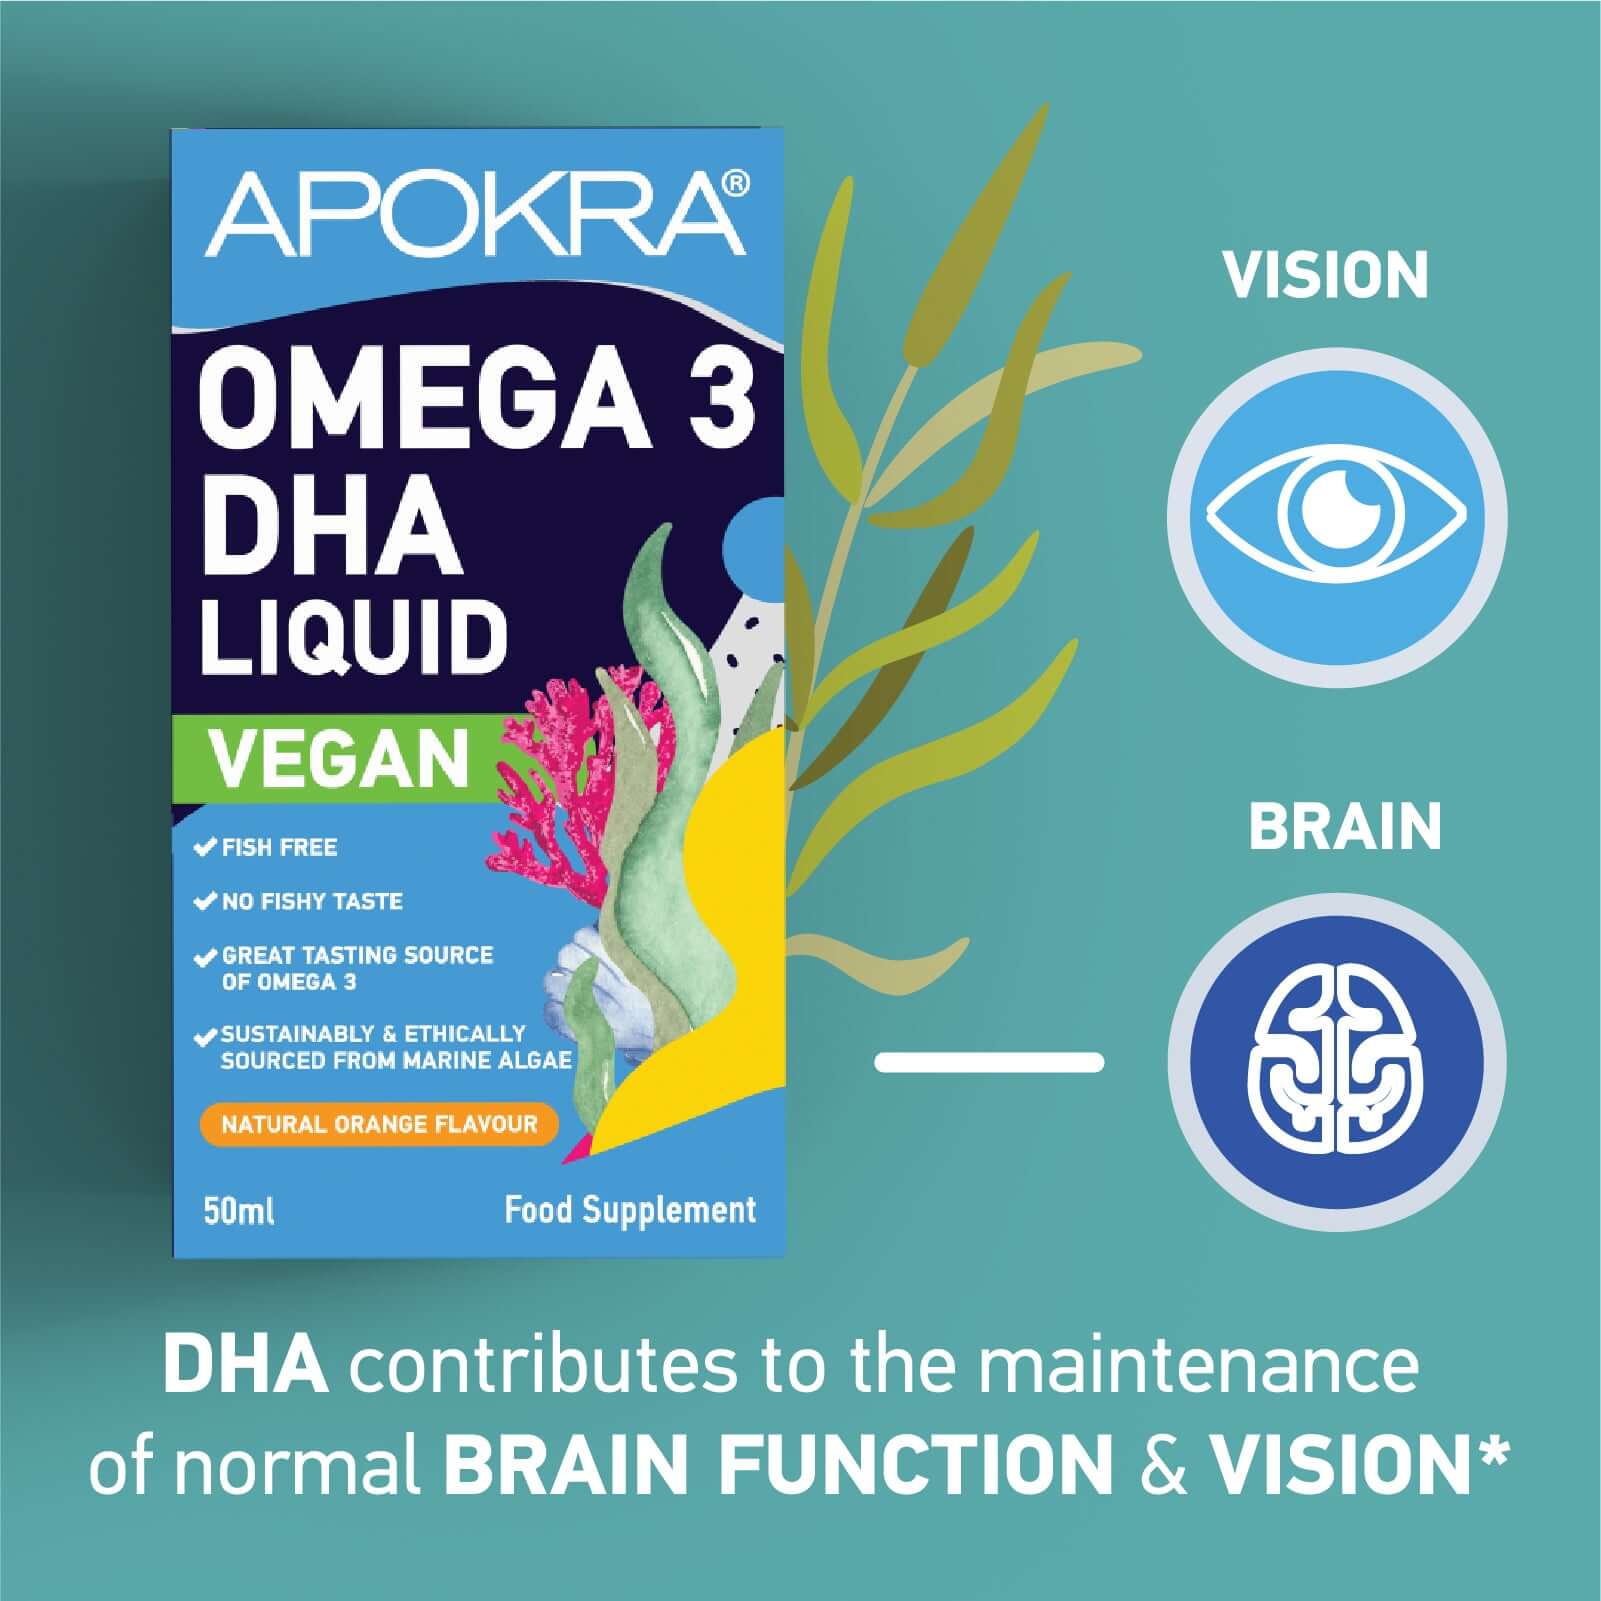 APOKRA algae omega 3 support brain function & vision